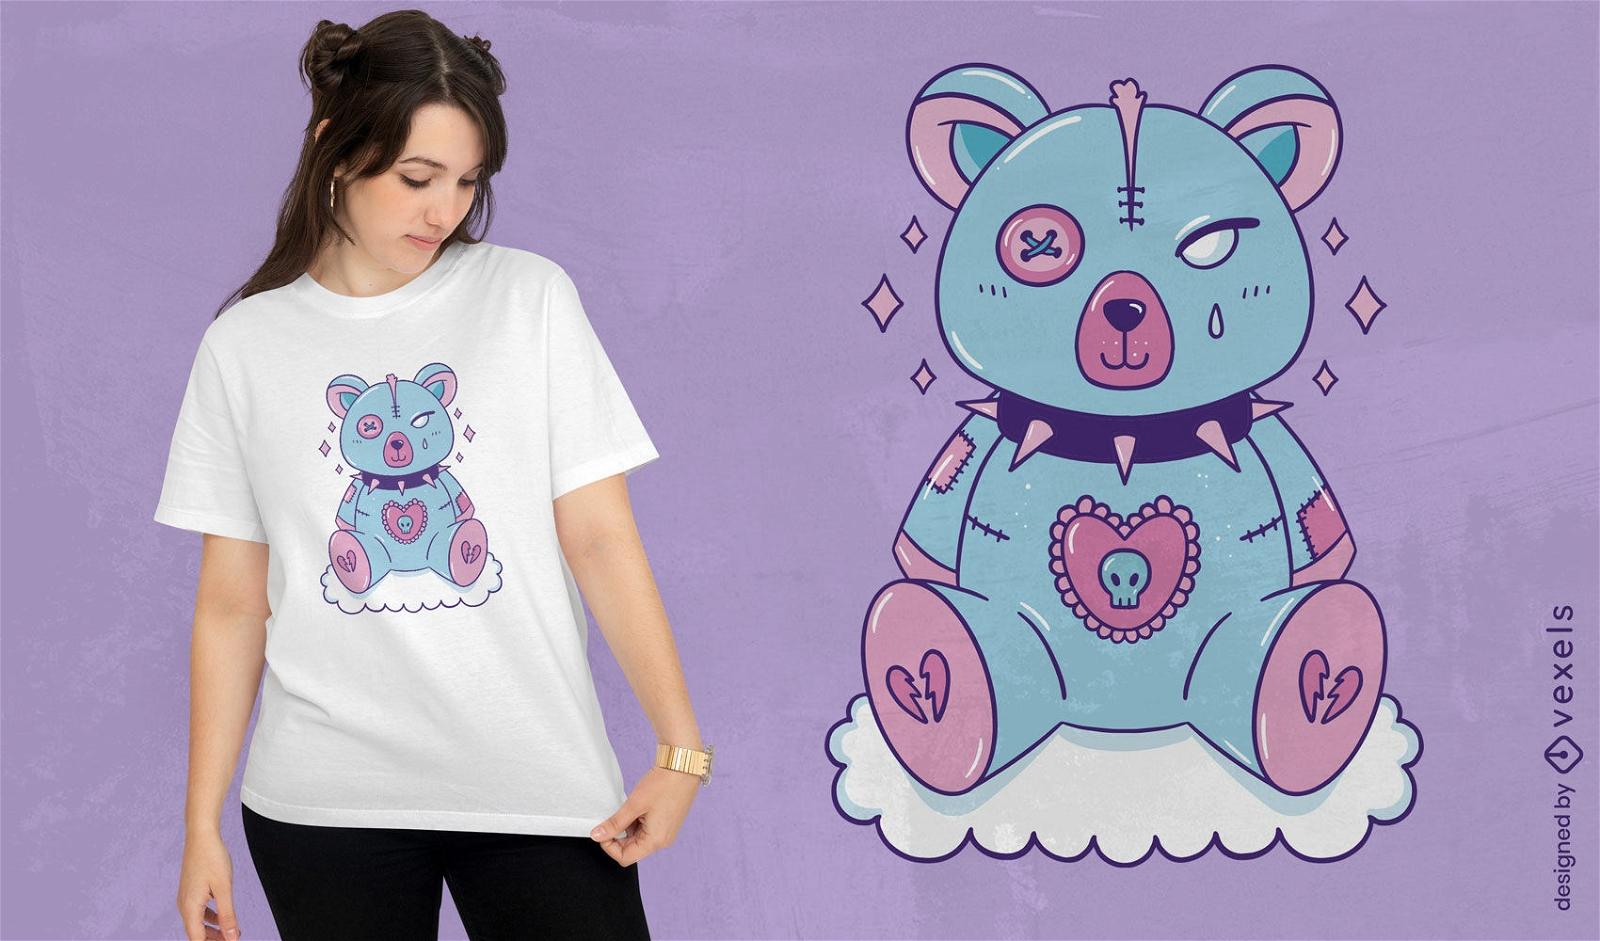 Creepy and cute teddy bear toy t-shirt design